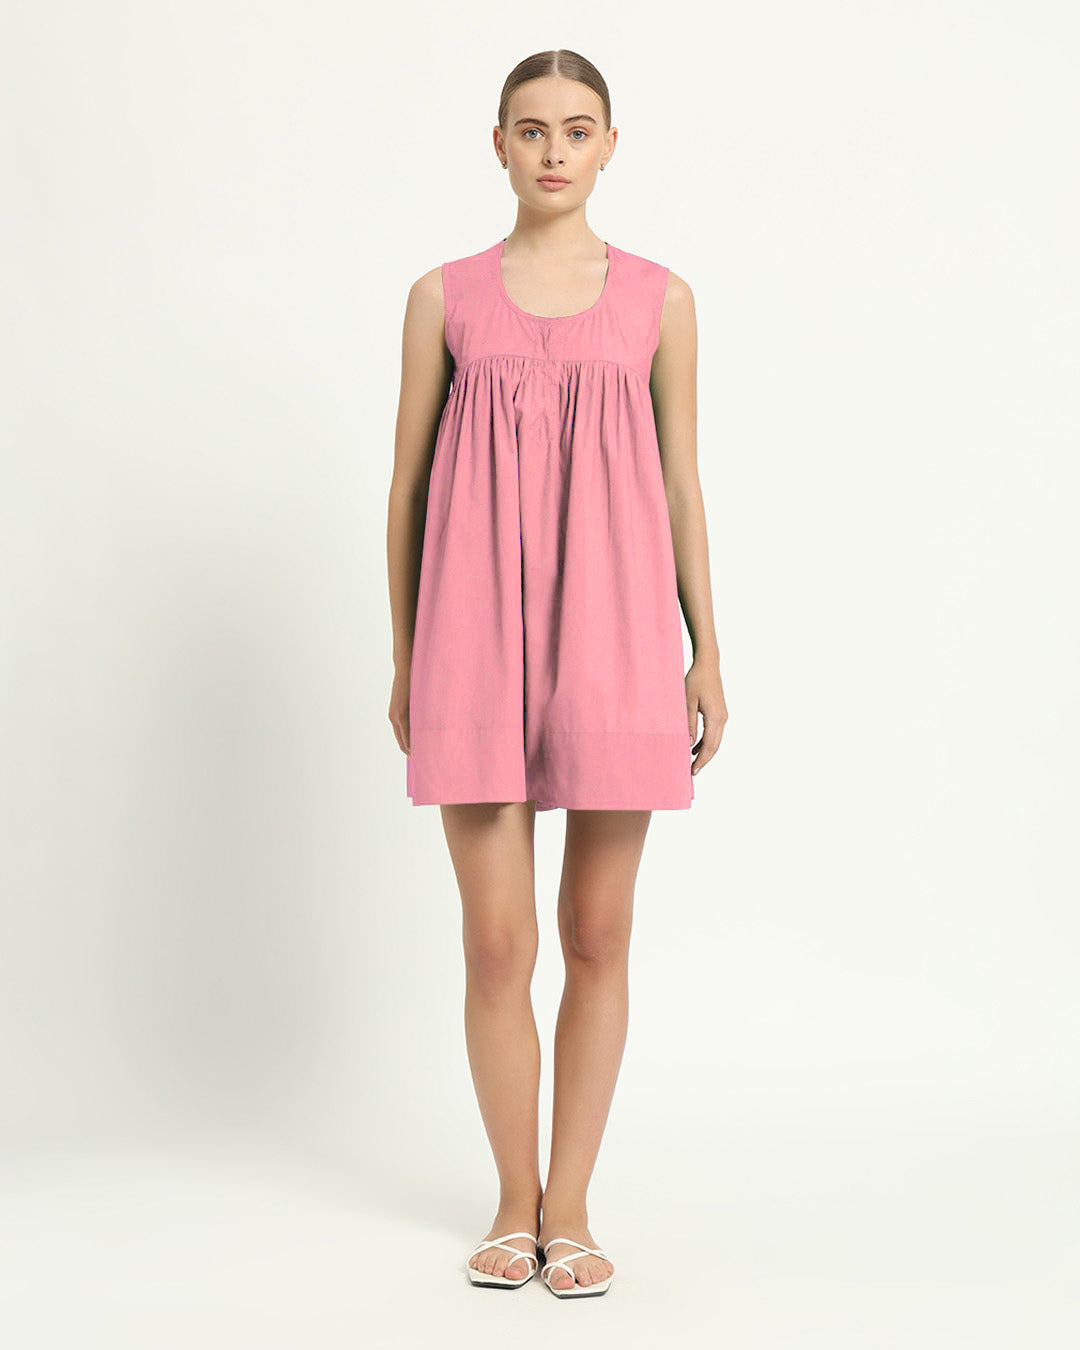 The Jois Fondant Pink Cotton Dress